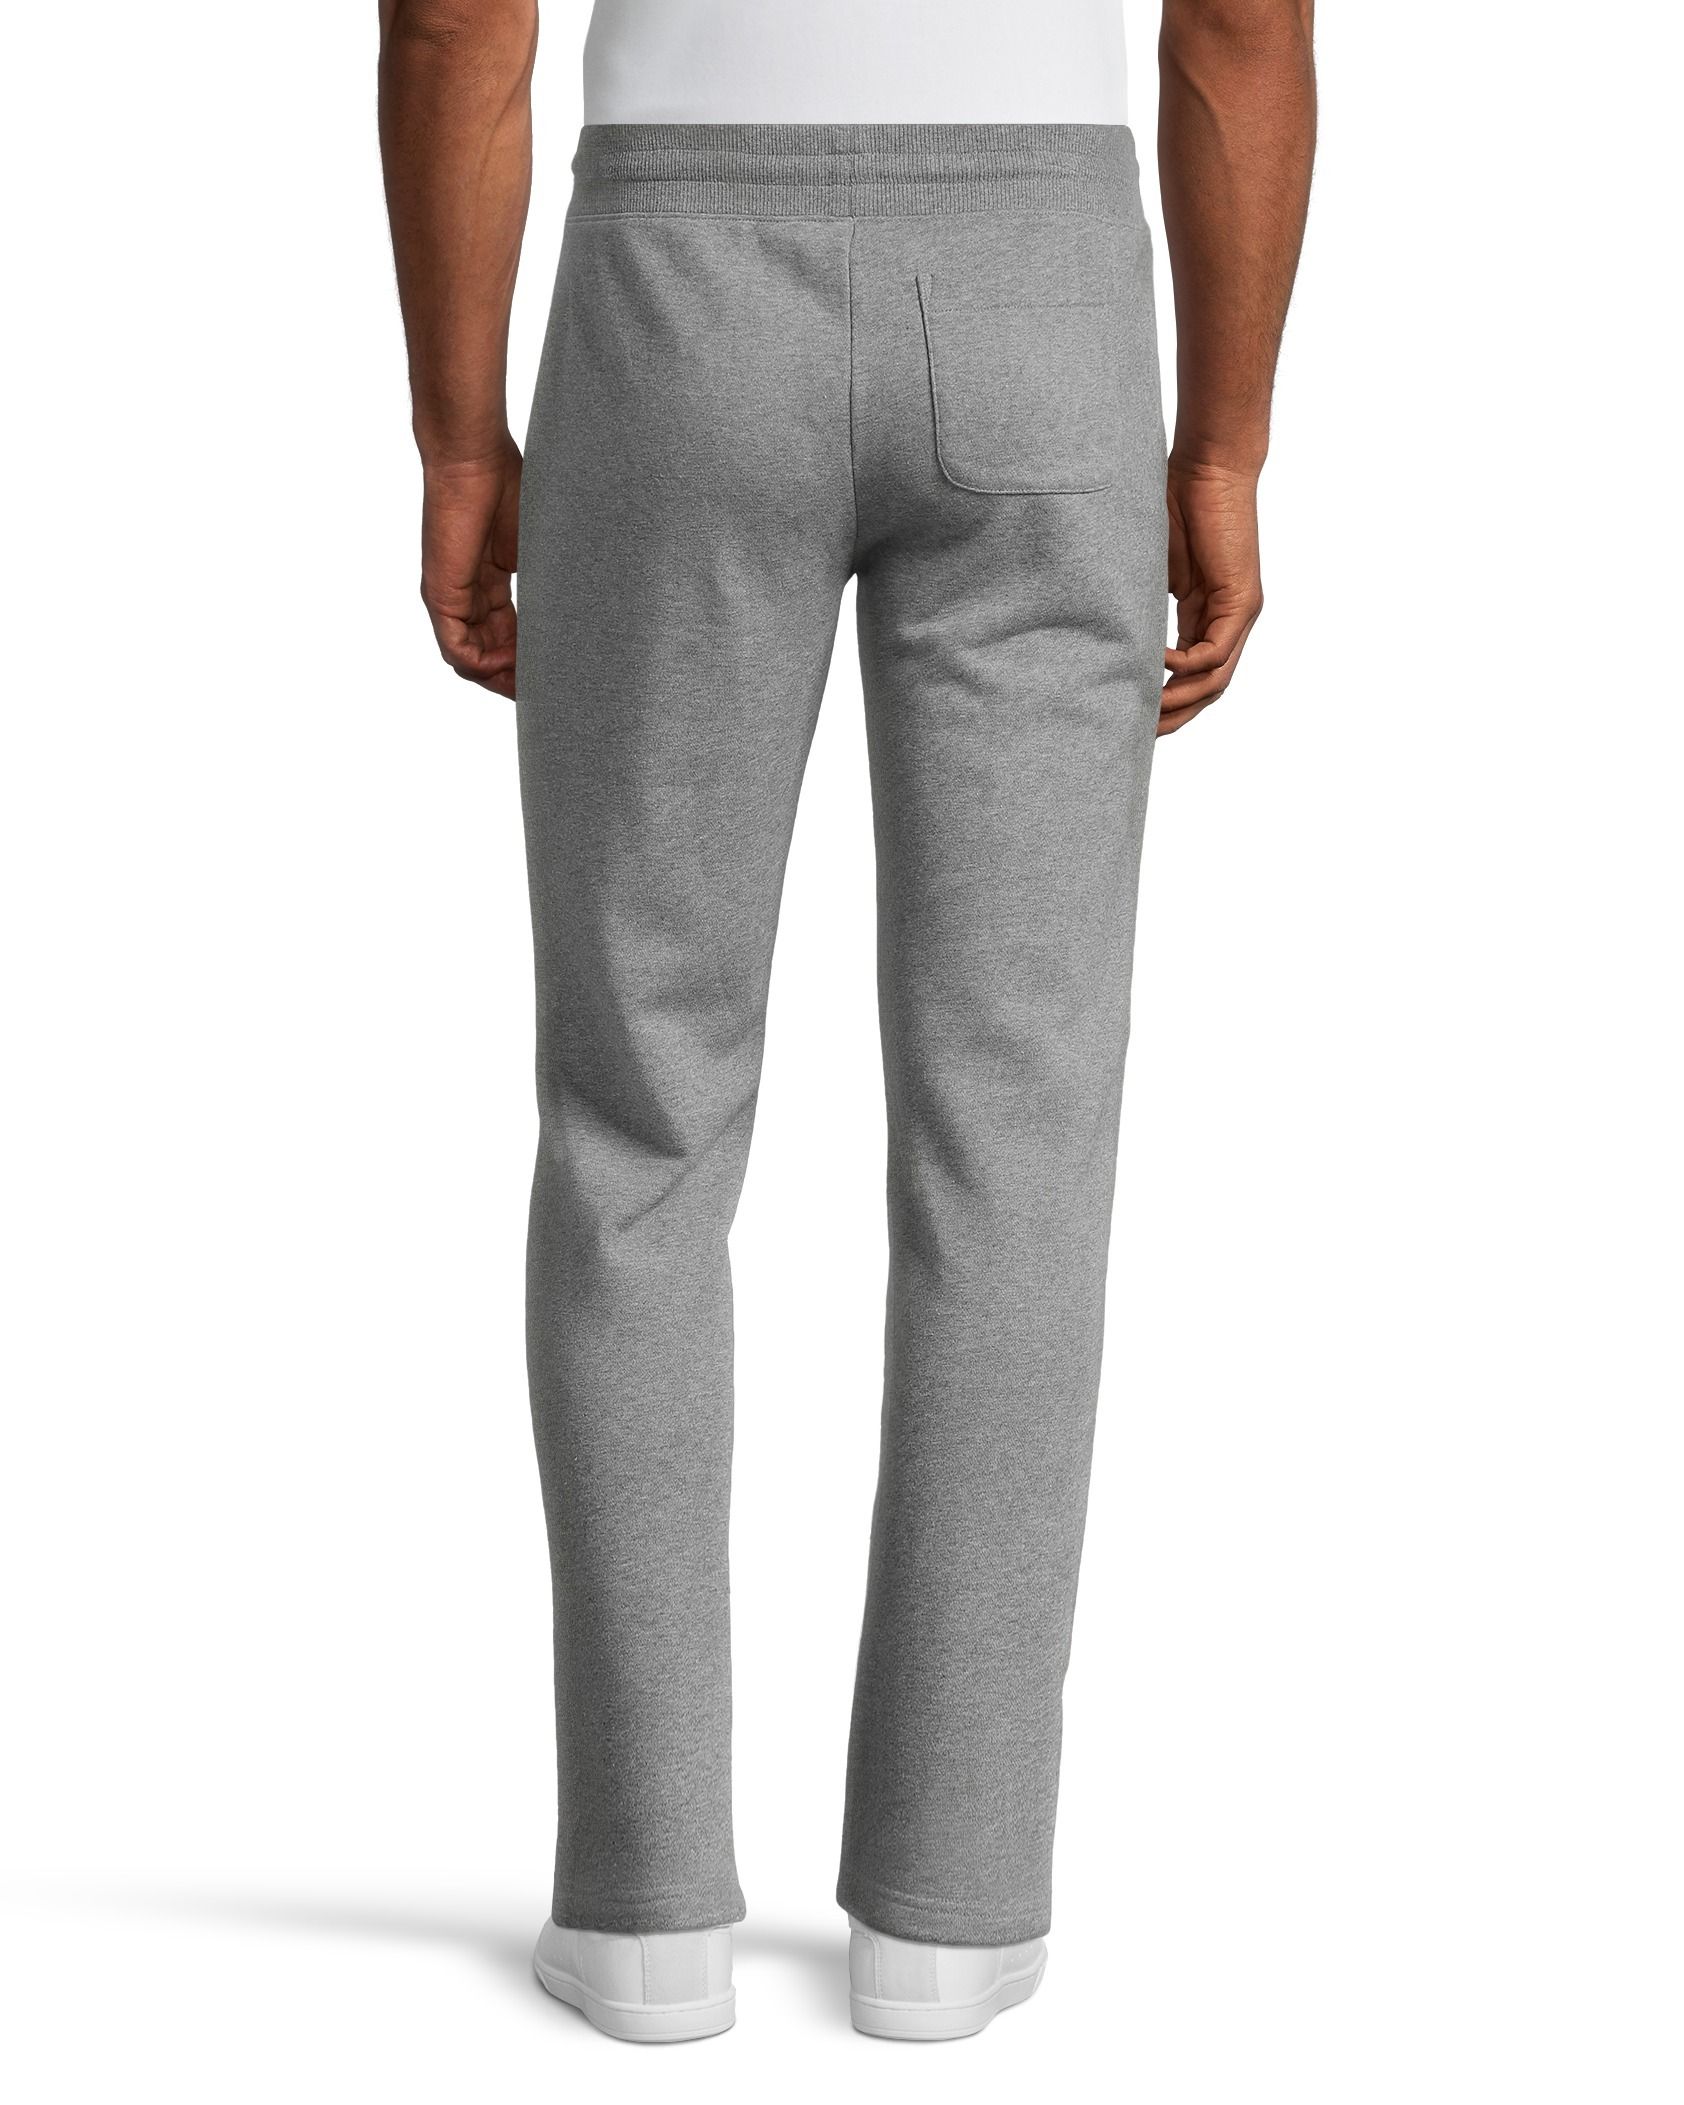 Mark's: Denver Hayes - Modern Flare Short Inseam Yoga Pants 